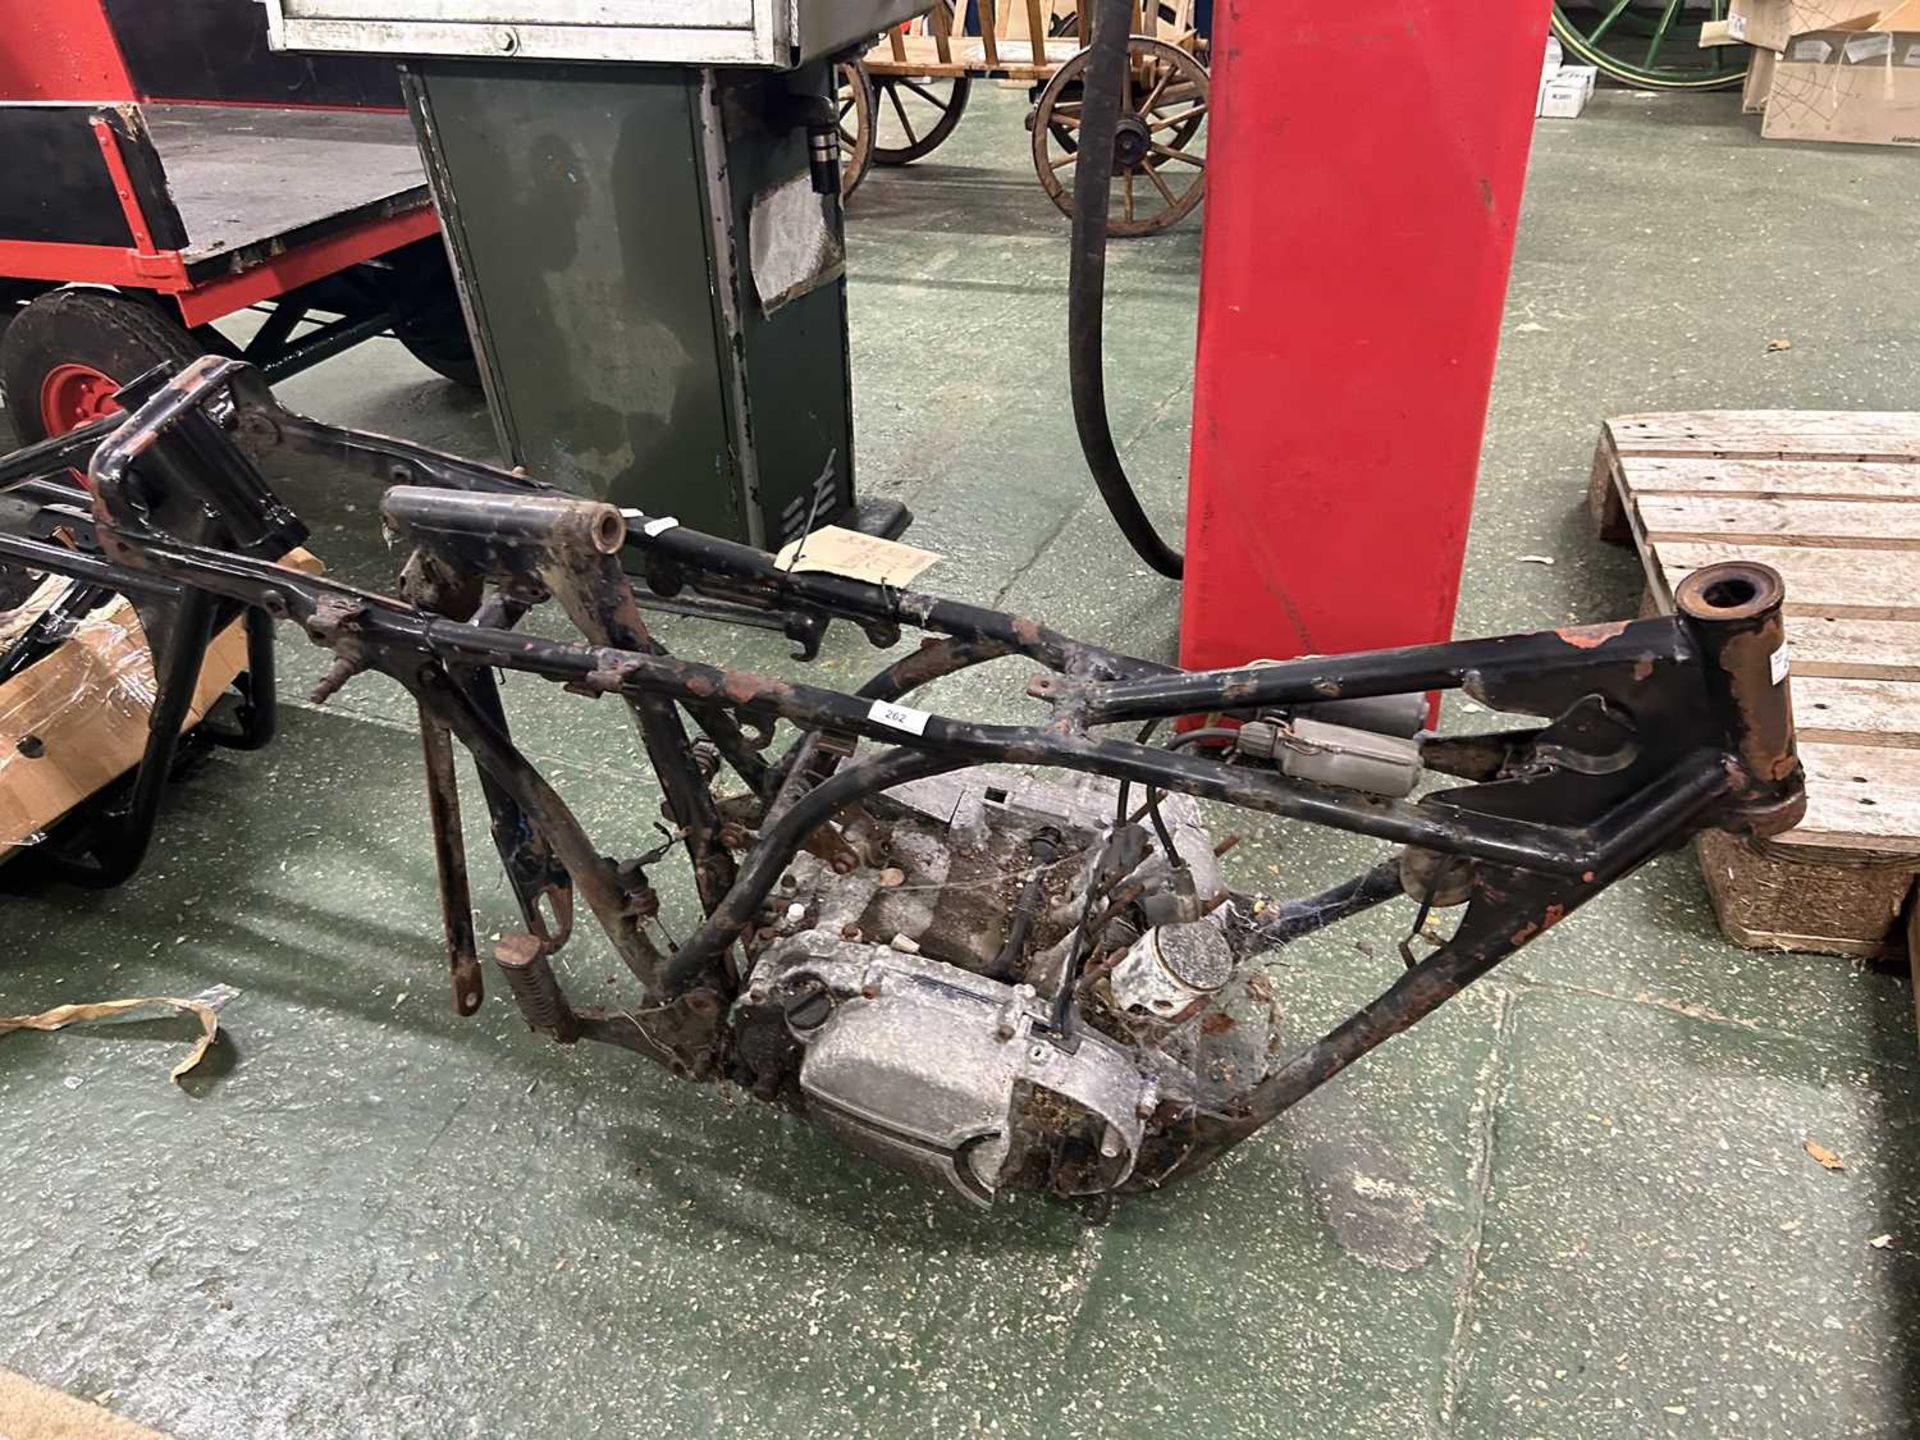 A Yamaha R5 motorbike frame and engine, for restoration